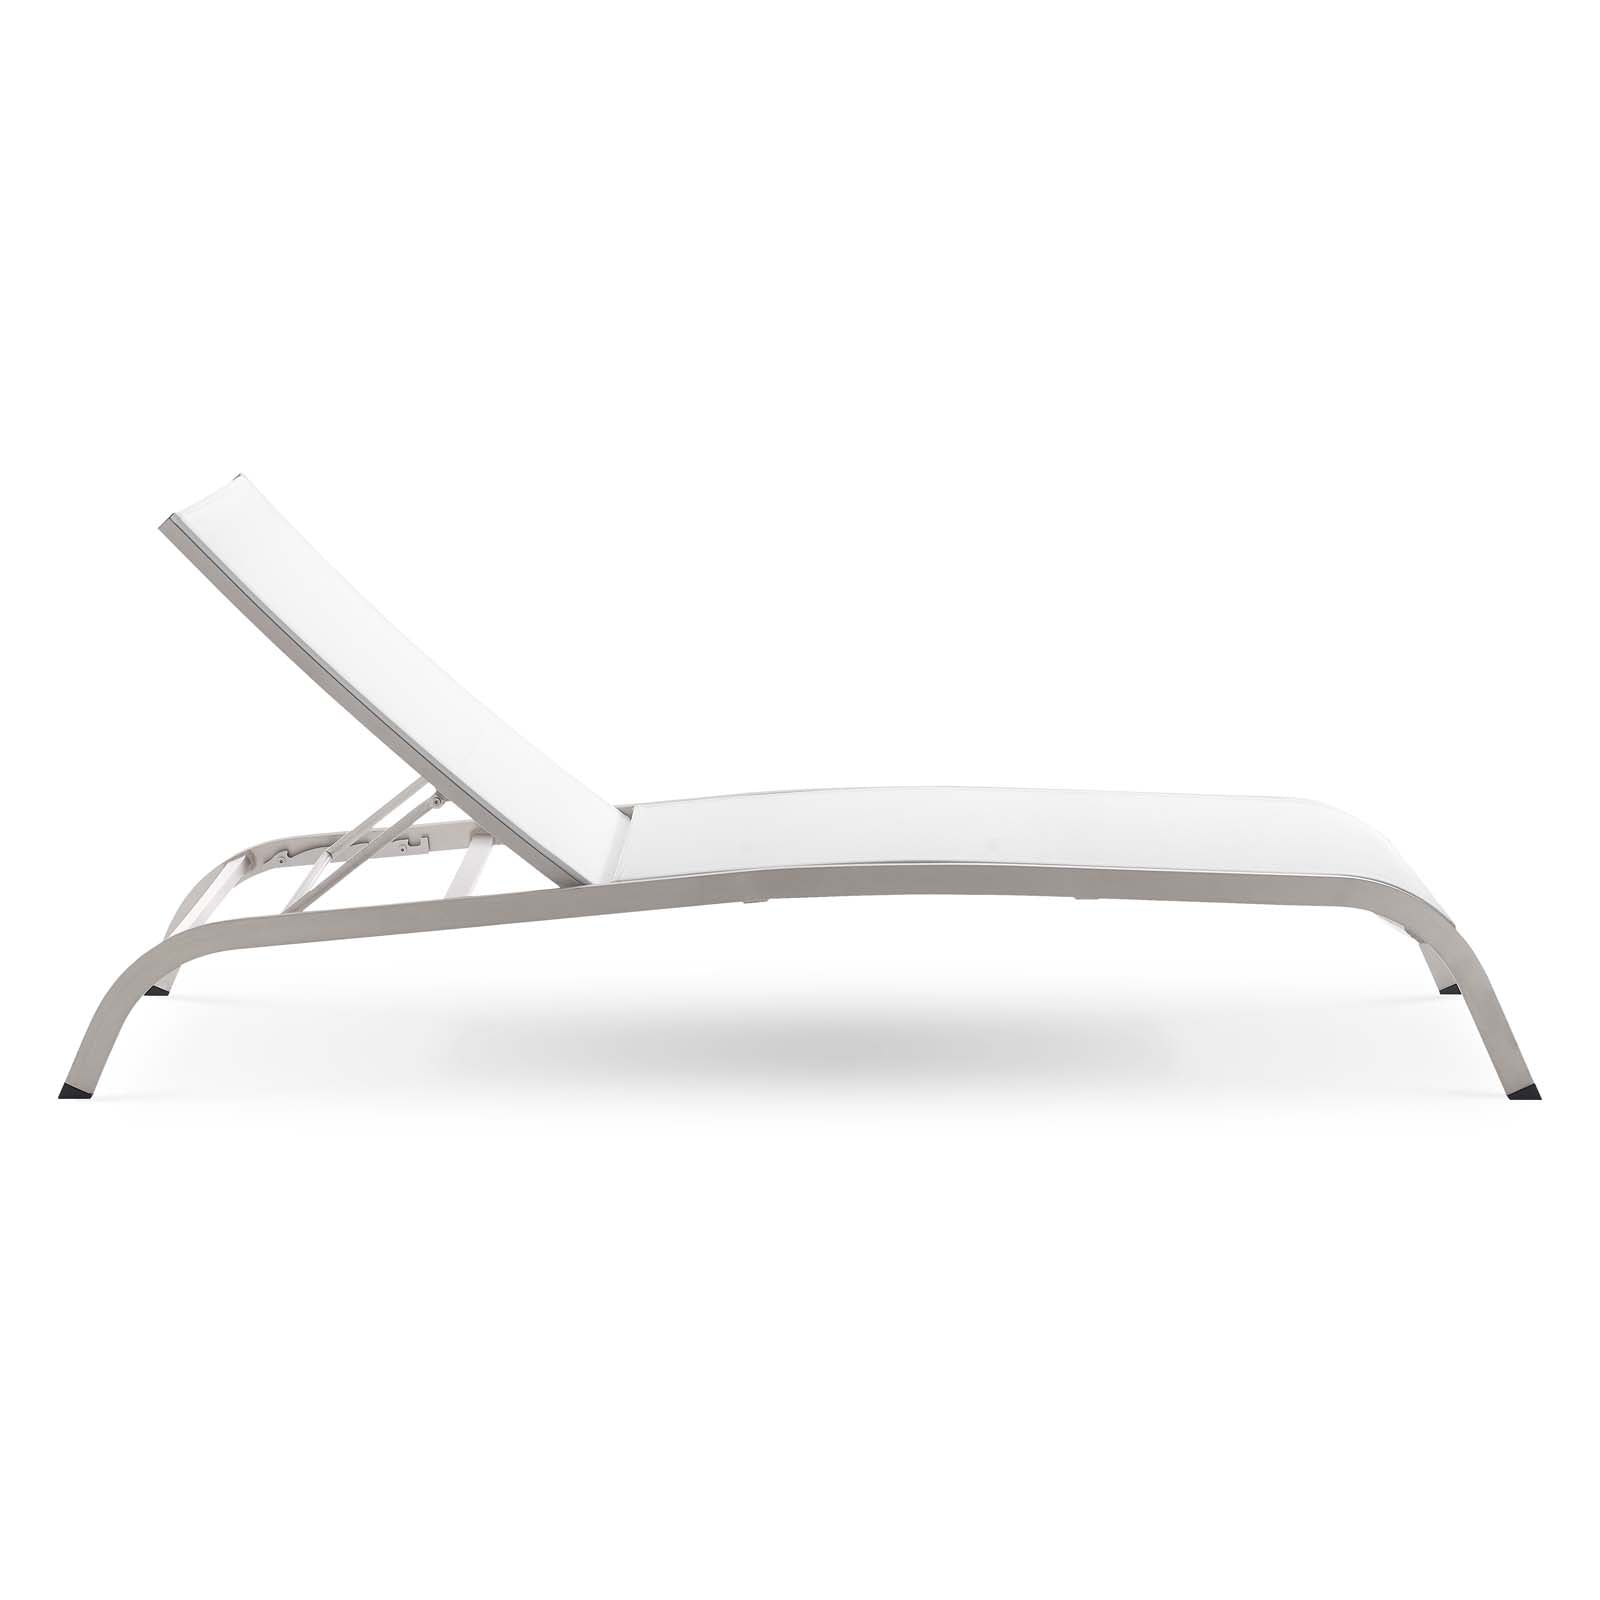 Savannah Mesh Chaise Outdoor Patio Aluminum Lounge Chair-Outdoor Lounge Chair-Modway-Wall2Wall Furnishings